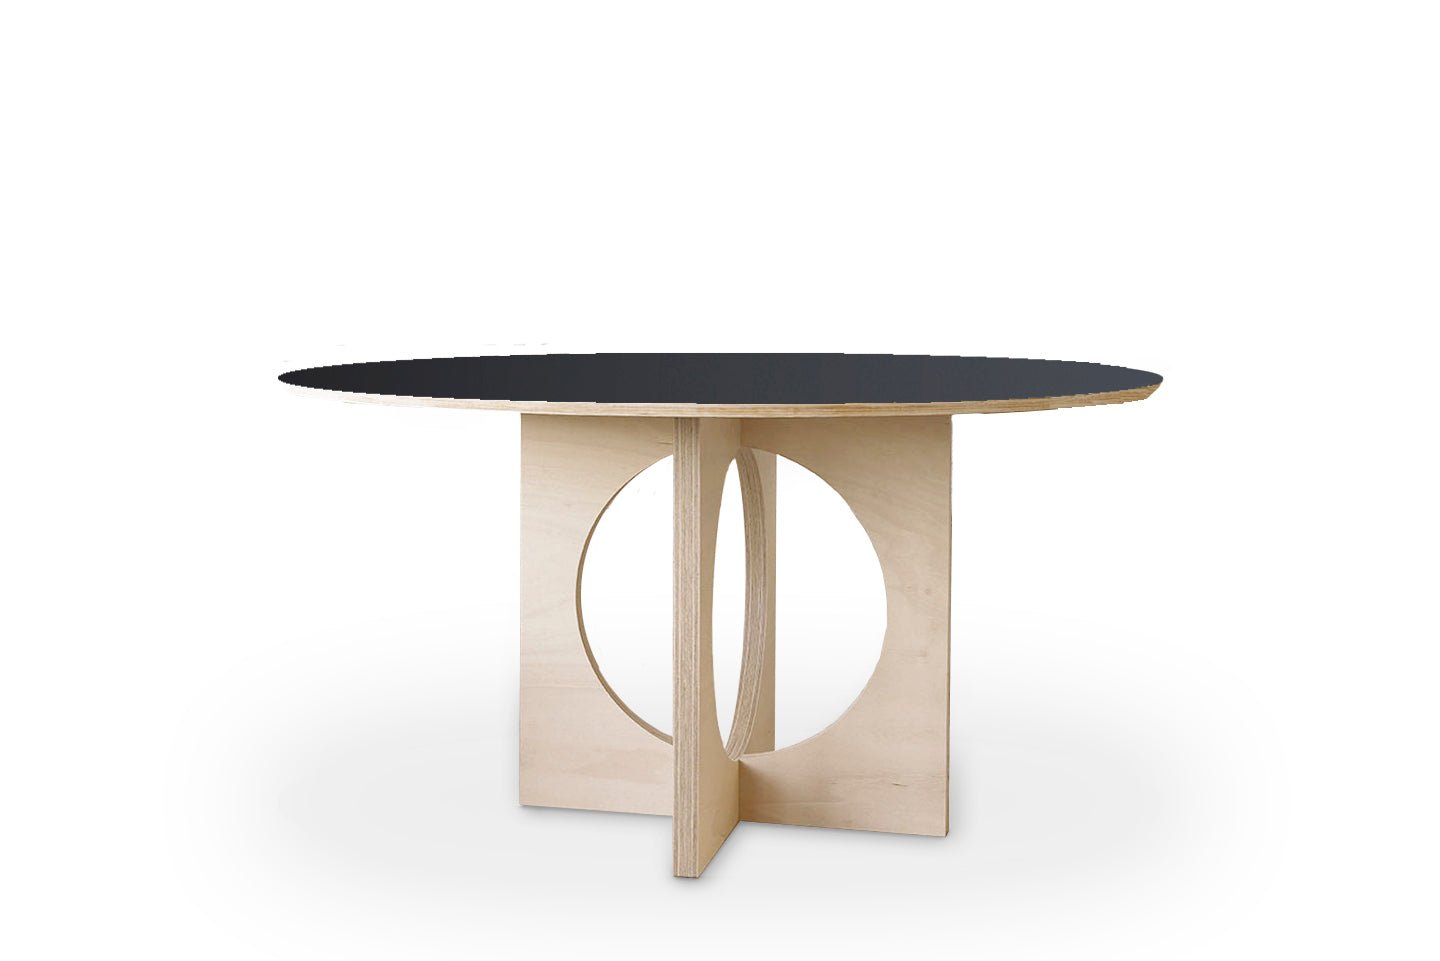 Pupil ronde tafel beuken Fenix zwart arp design